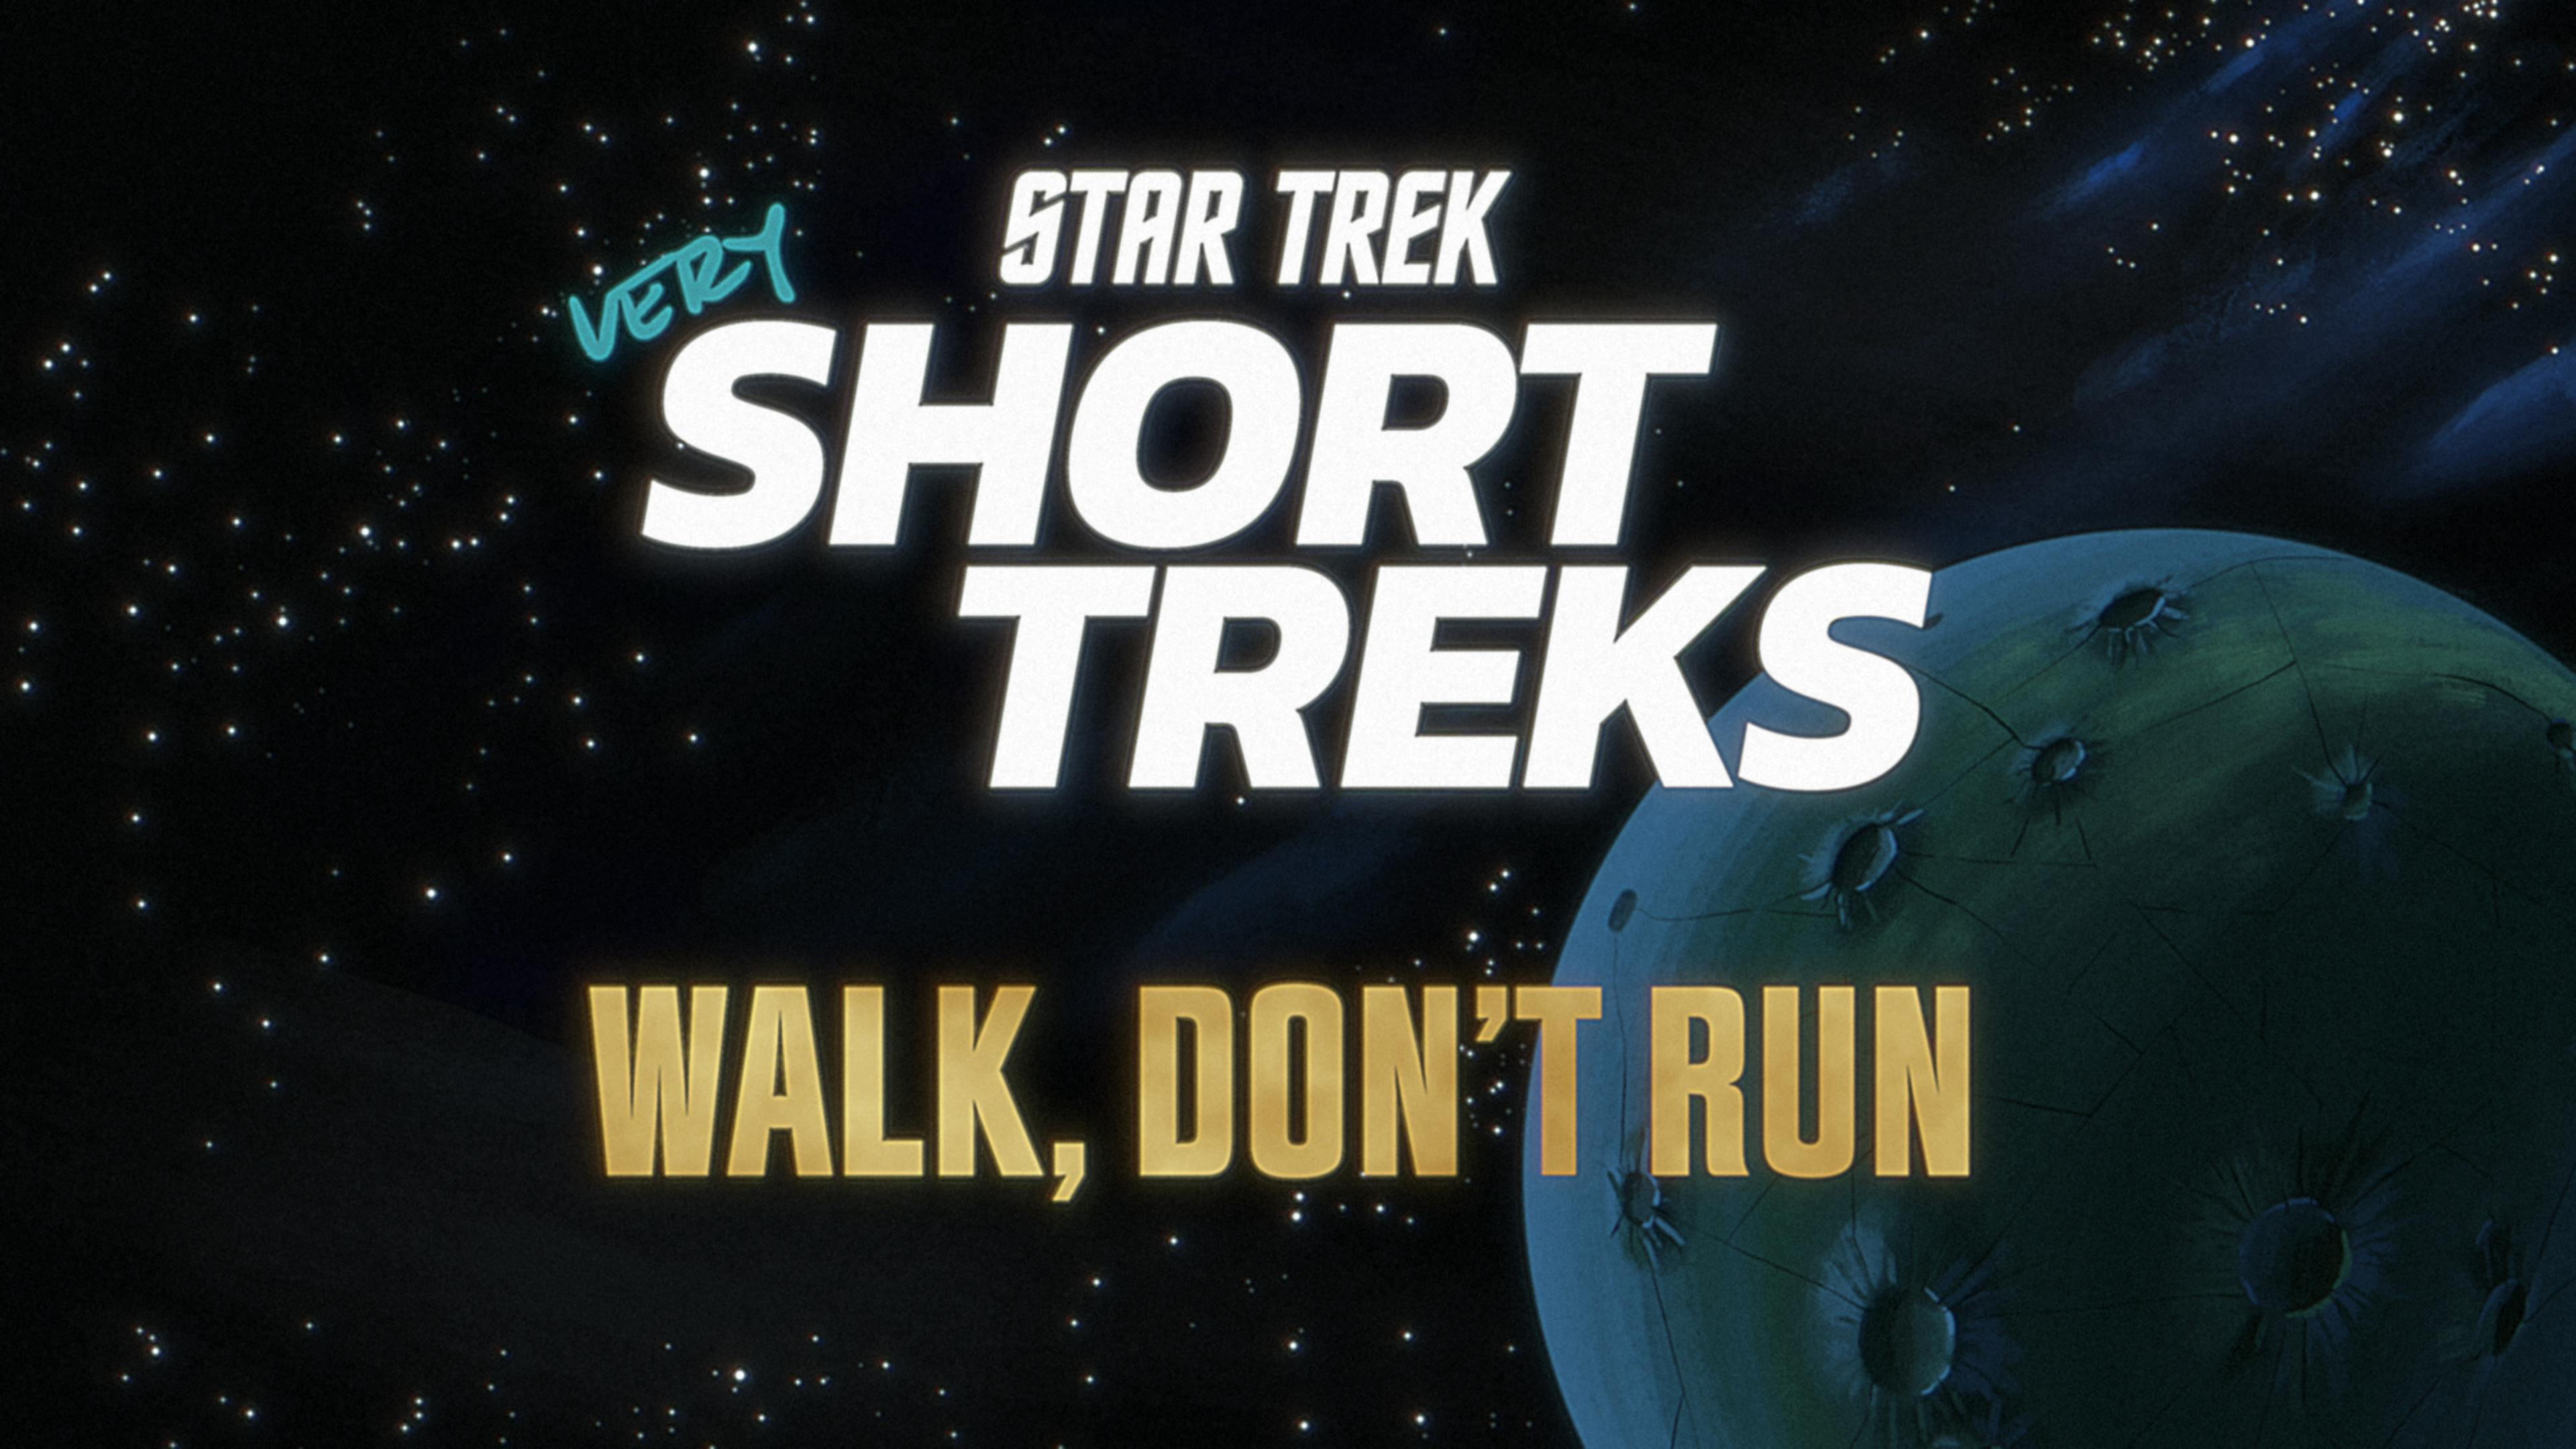 Star Trek: very Short Treks title treatment with 'Walk, Don't Run' text